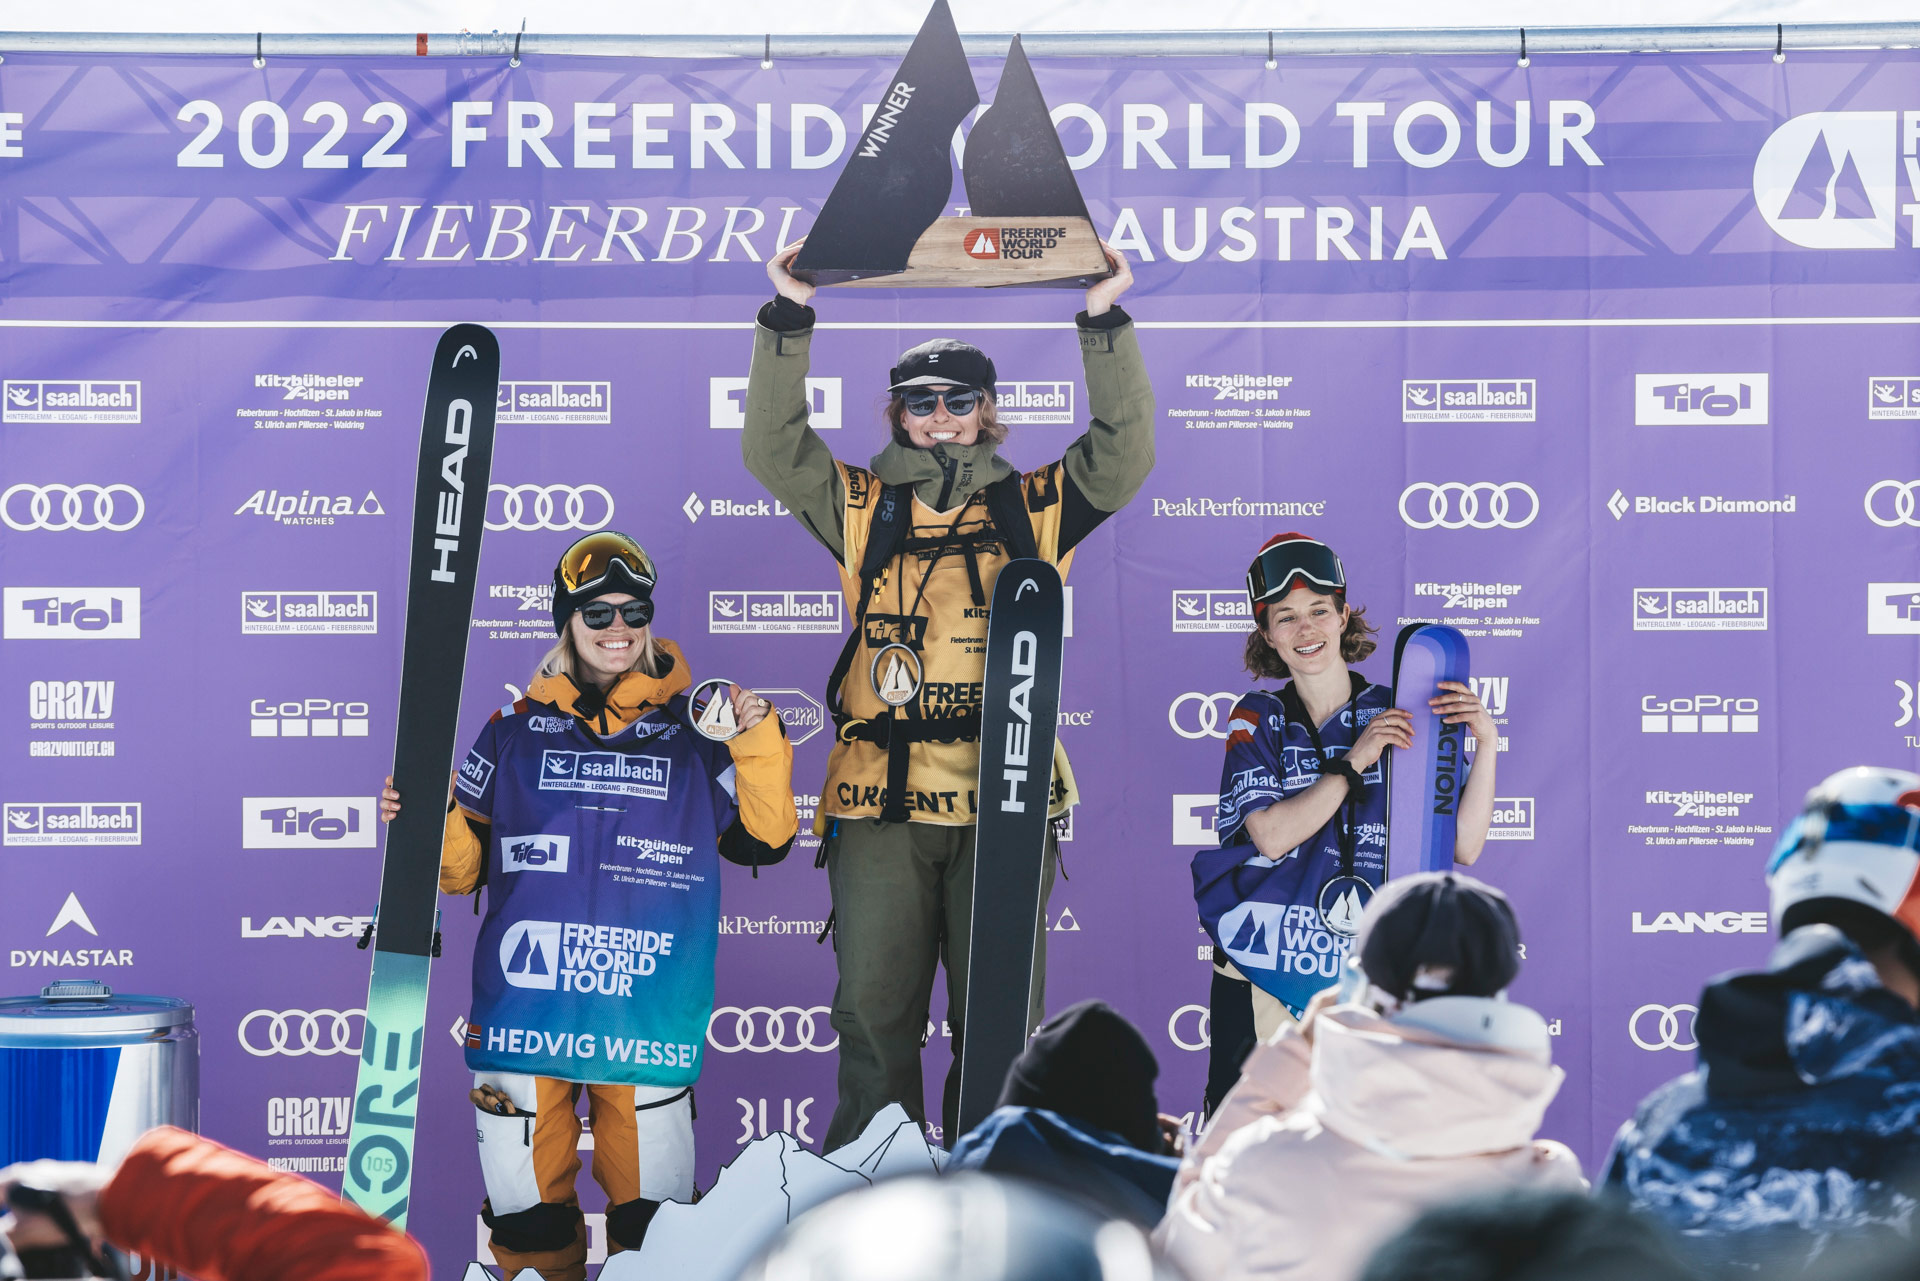 Women's podium at the 2022 Freeride World Tour stop in Fieberbrunn, Austria